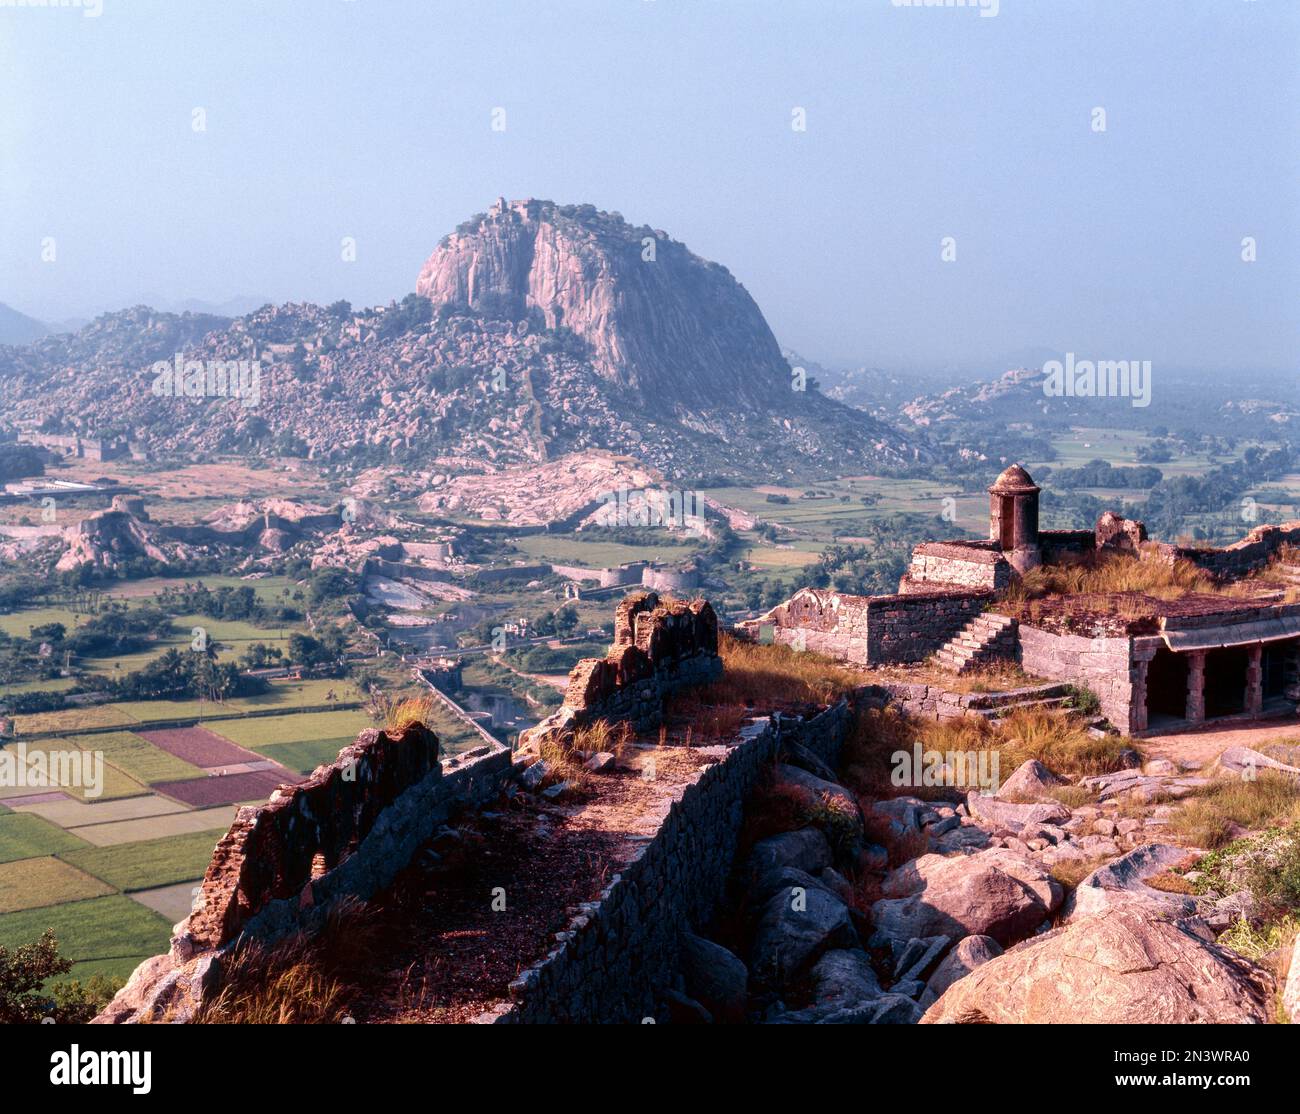 13th century Gingee fort built on three hills, Krishnagiri, Rajagiri and Chandragiri forming a triangle, Tamil Nadu, South India, India, Asia Stock Photo